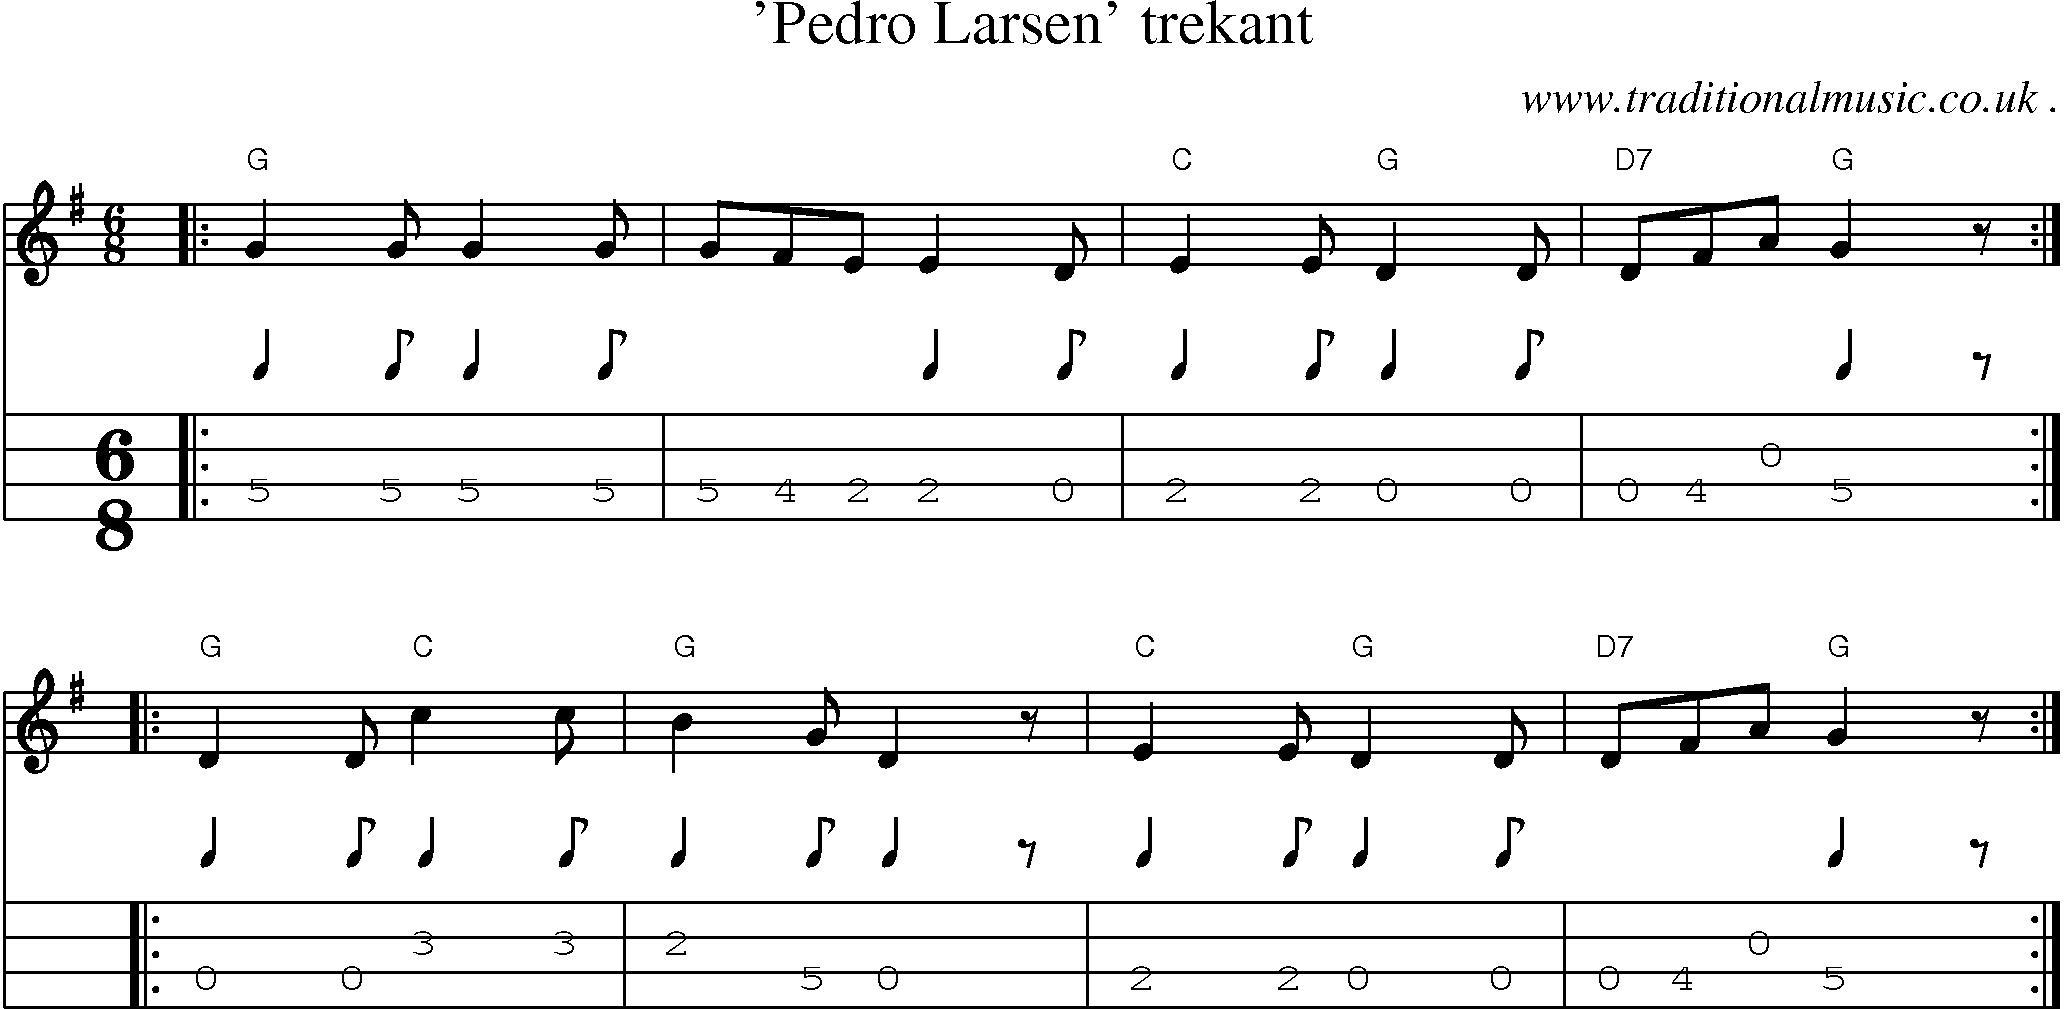 Sheet-music  score, Chords and Mandolin Tabs for Pedro Larsen Trekant